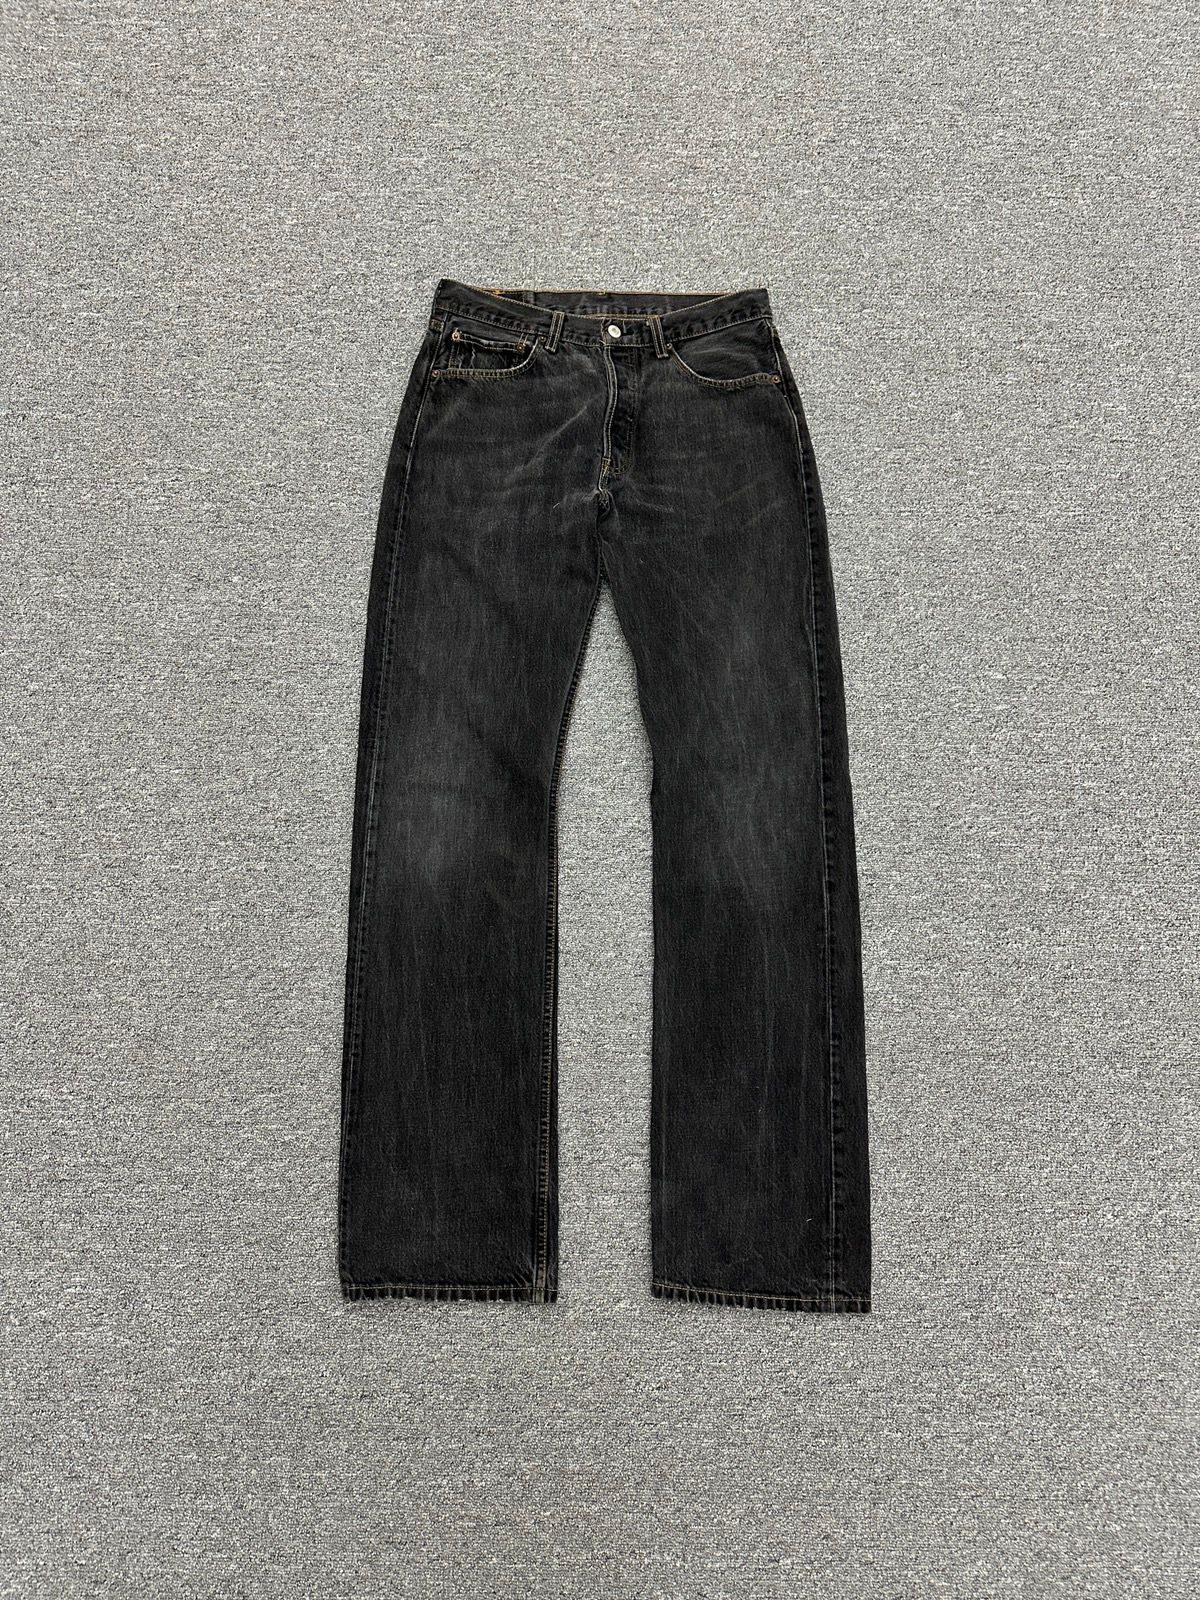 Vintage Vintage 501 Levi’s Faded Black Denim Pants Size US 32 / EU 48 - 4 Thumbnail